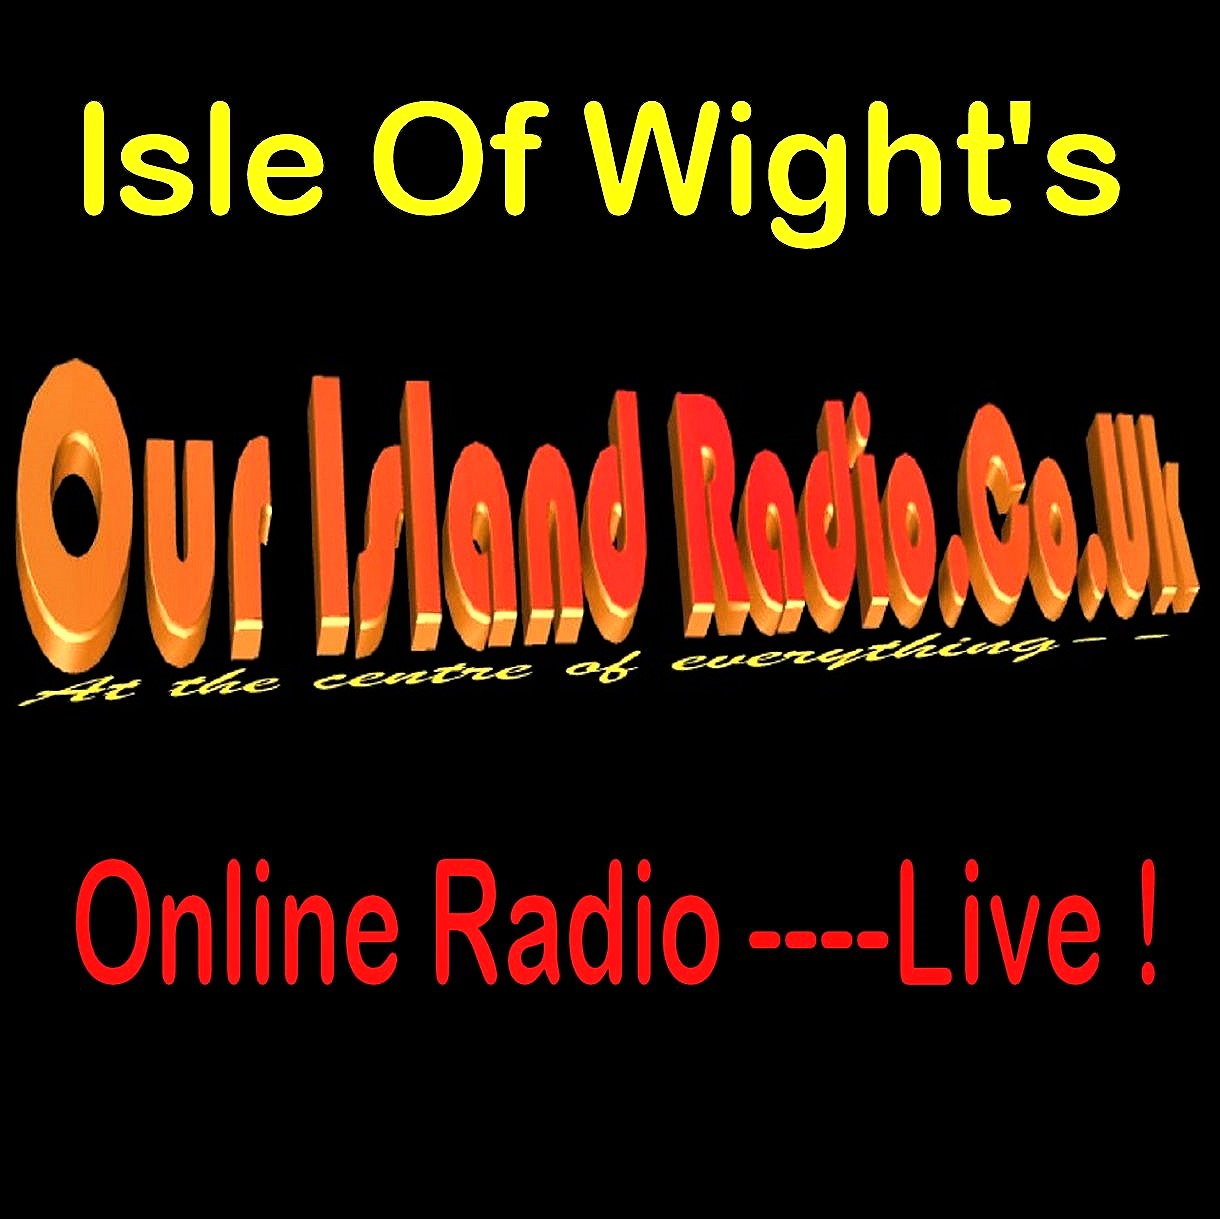 OUR ISLAND RADIO